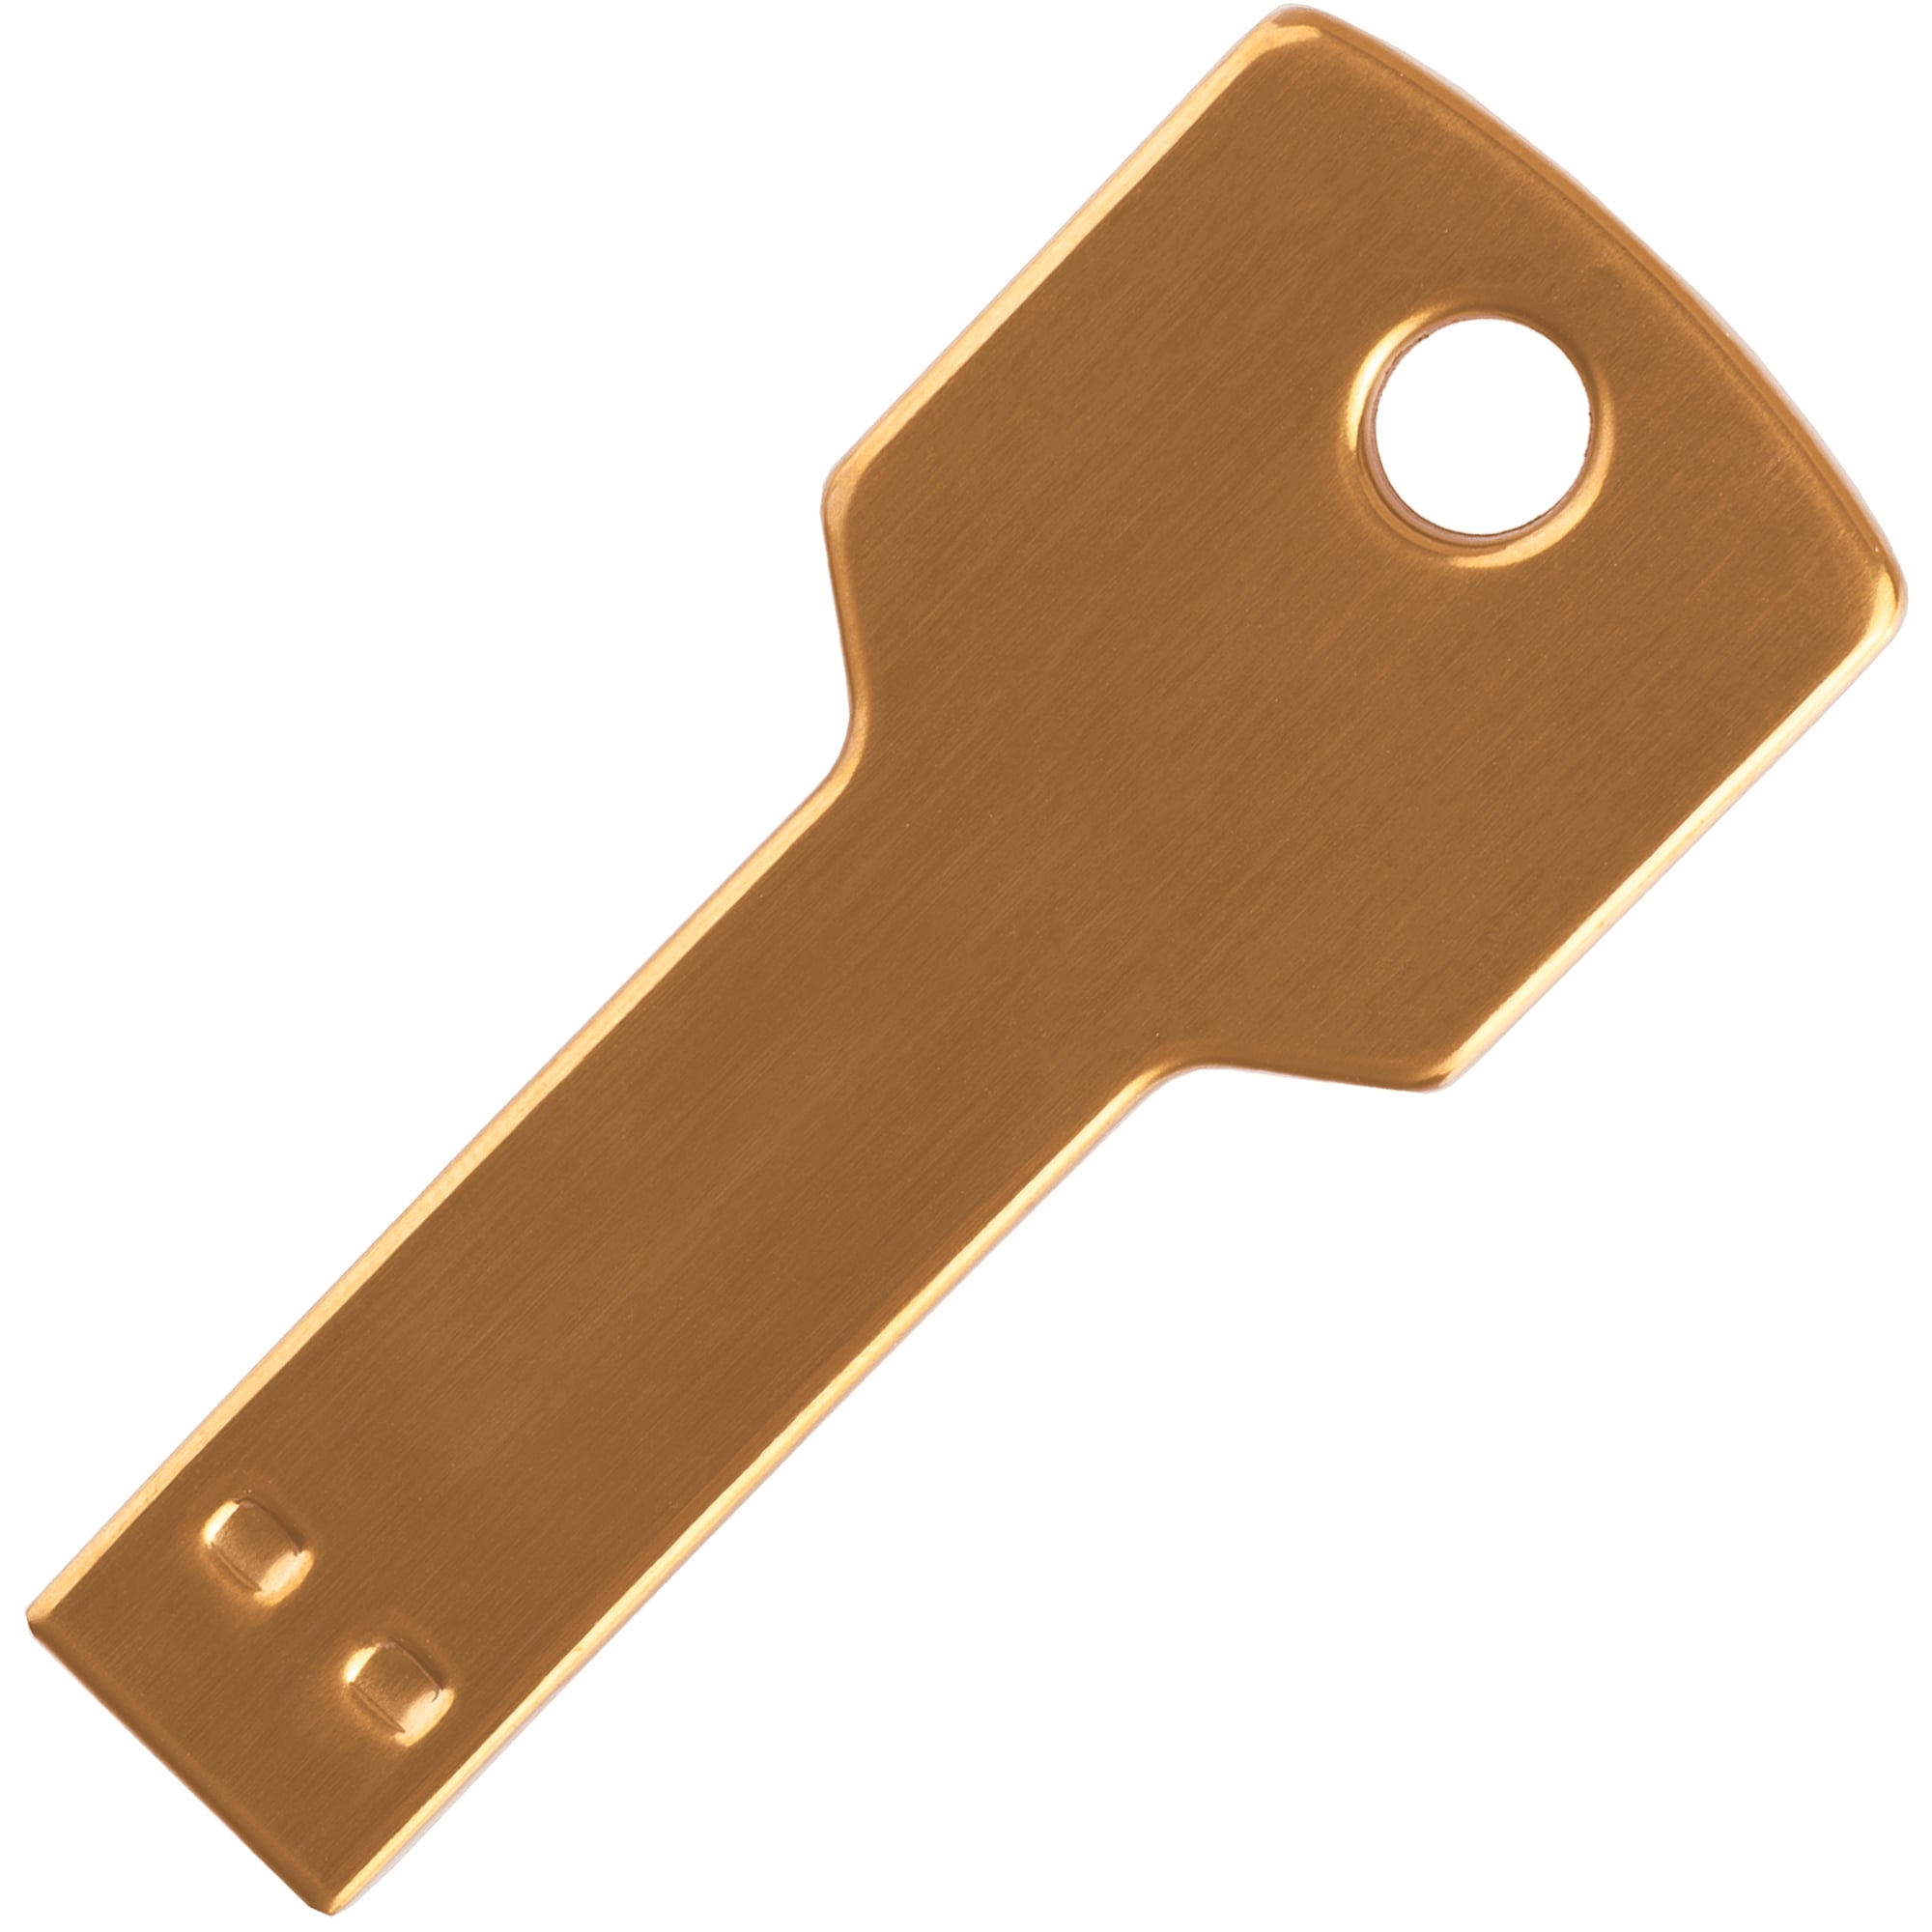 Flash ключ. Флешка «ключ», 16 ГБ. Ключ BIOTIME флешка. Флешка ключ для intermatic. Флешка ключ для вендингового автомата.